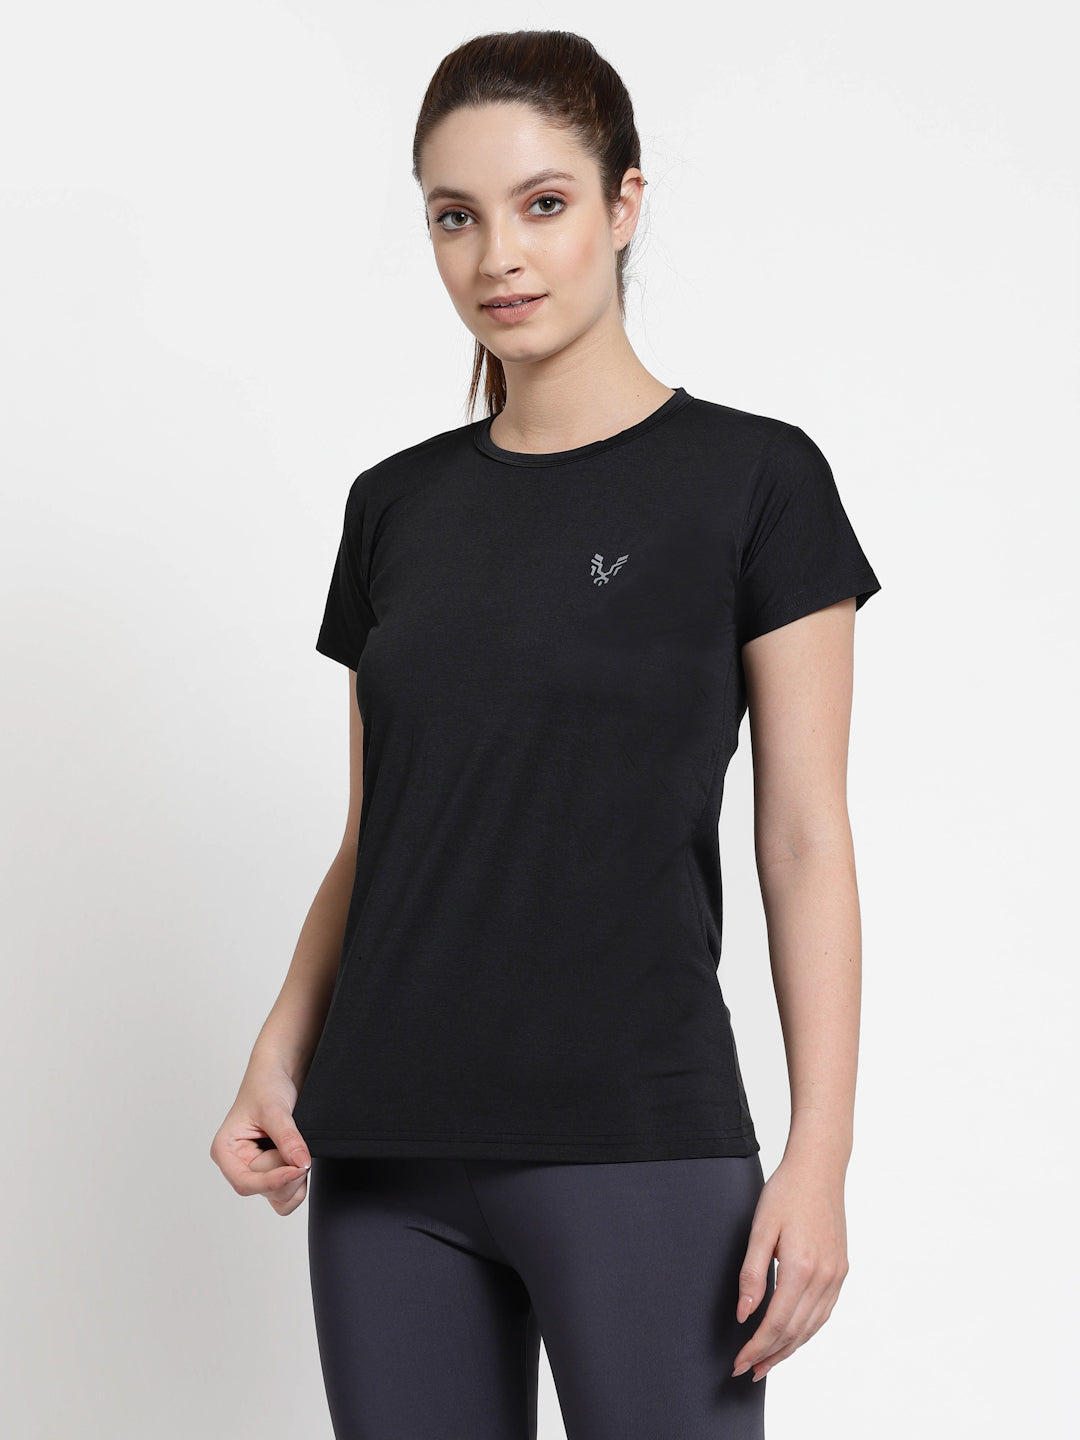 Sports Tops & T Shirts, Women's Gym T Shirts